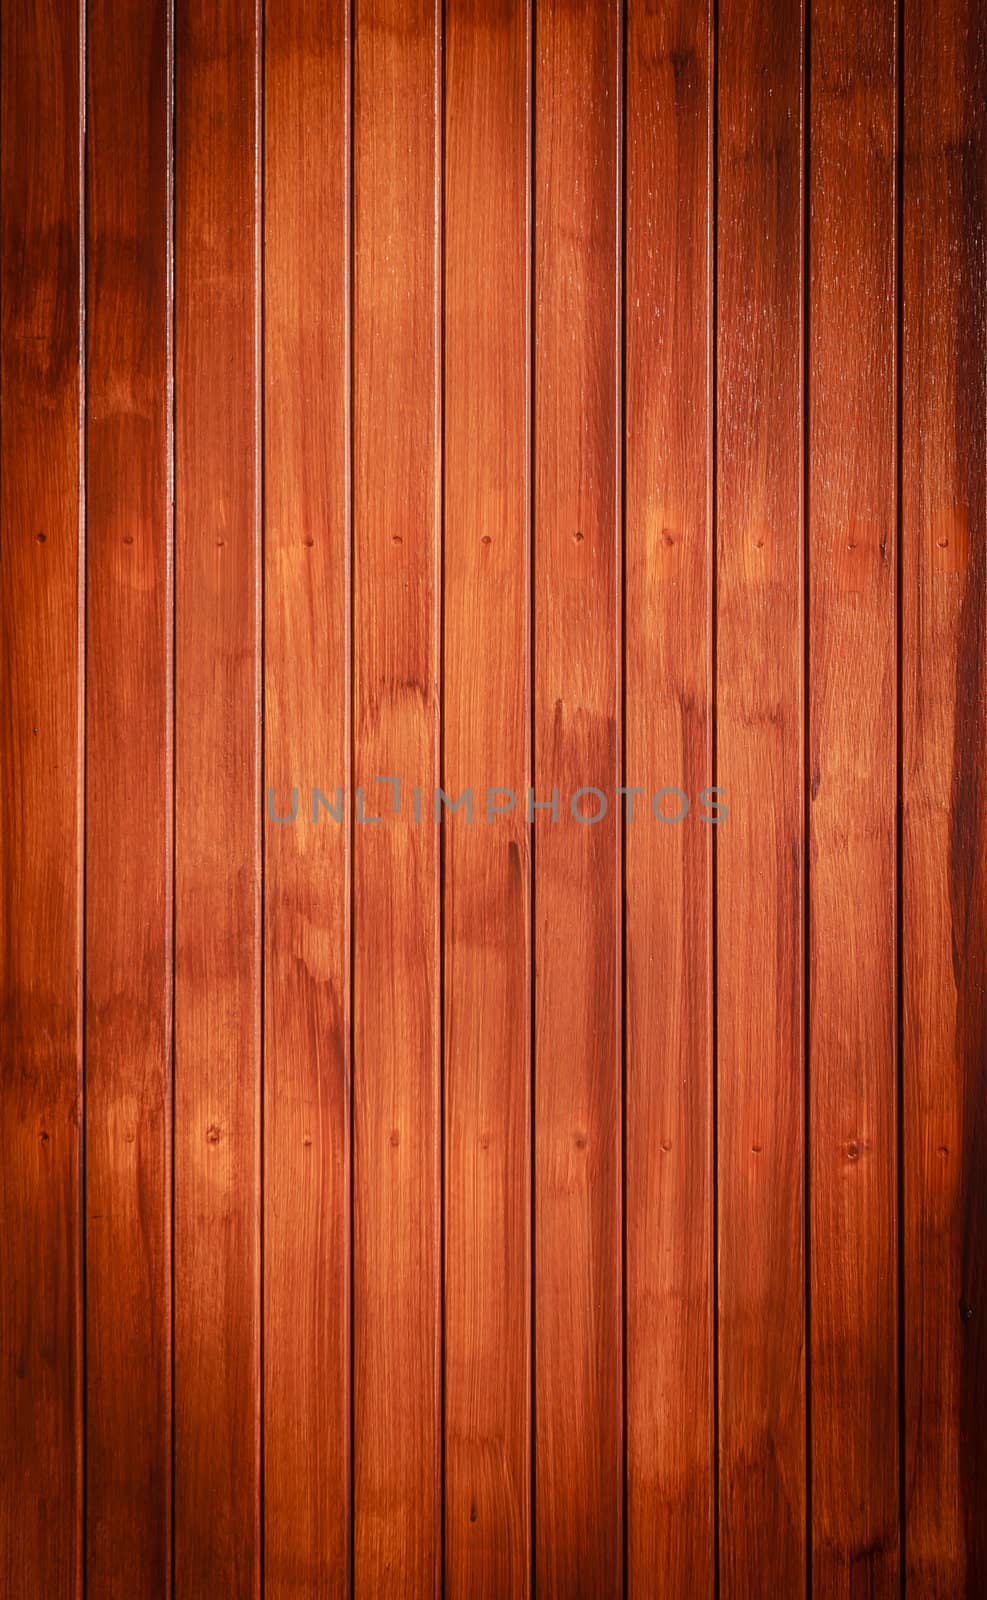 Wood texture background in vertical pattern, dark brown color.